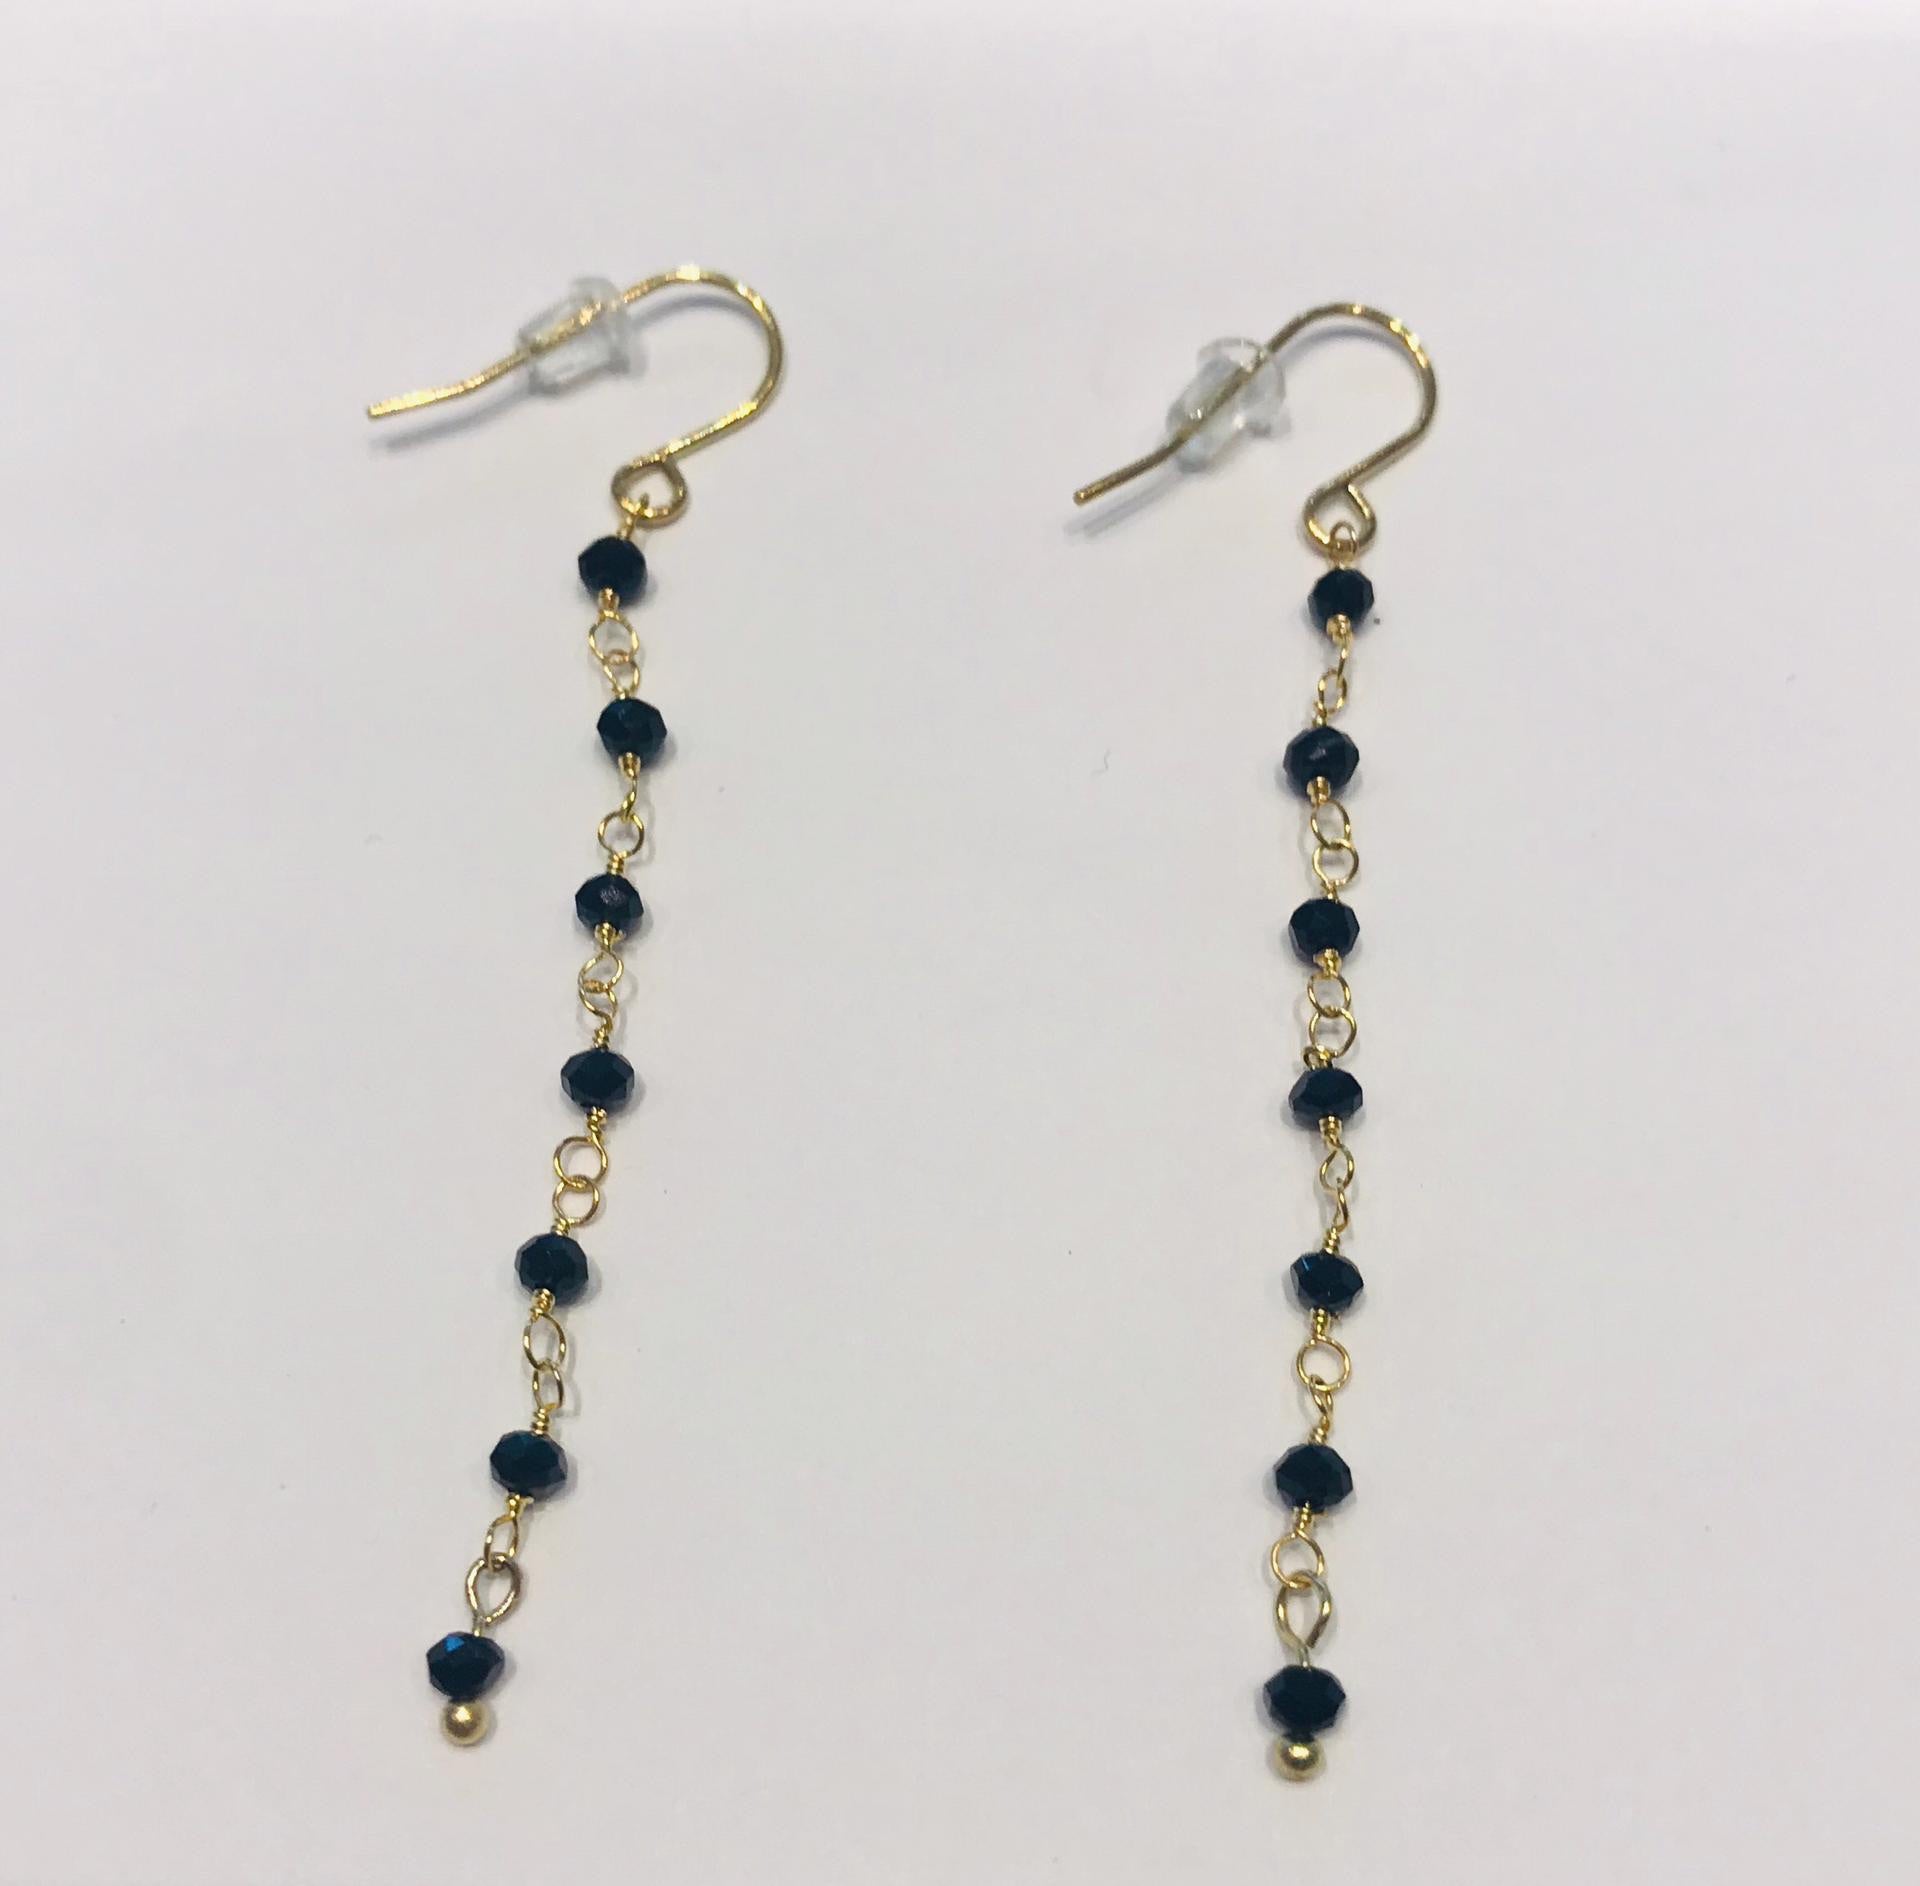 Steel earrings with black crystals by SAM&CEL. 